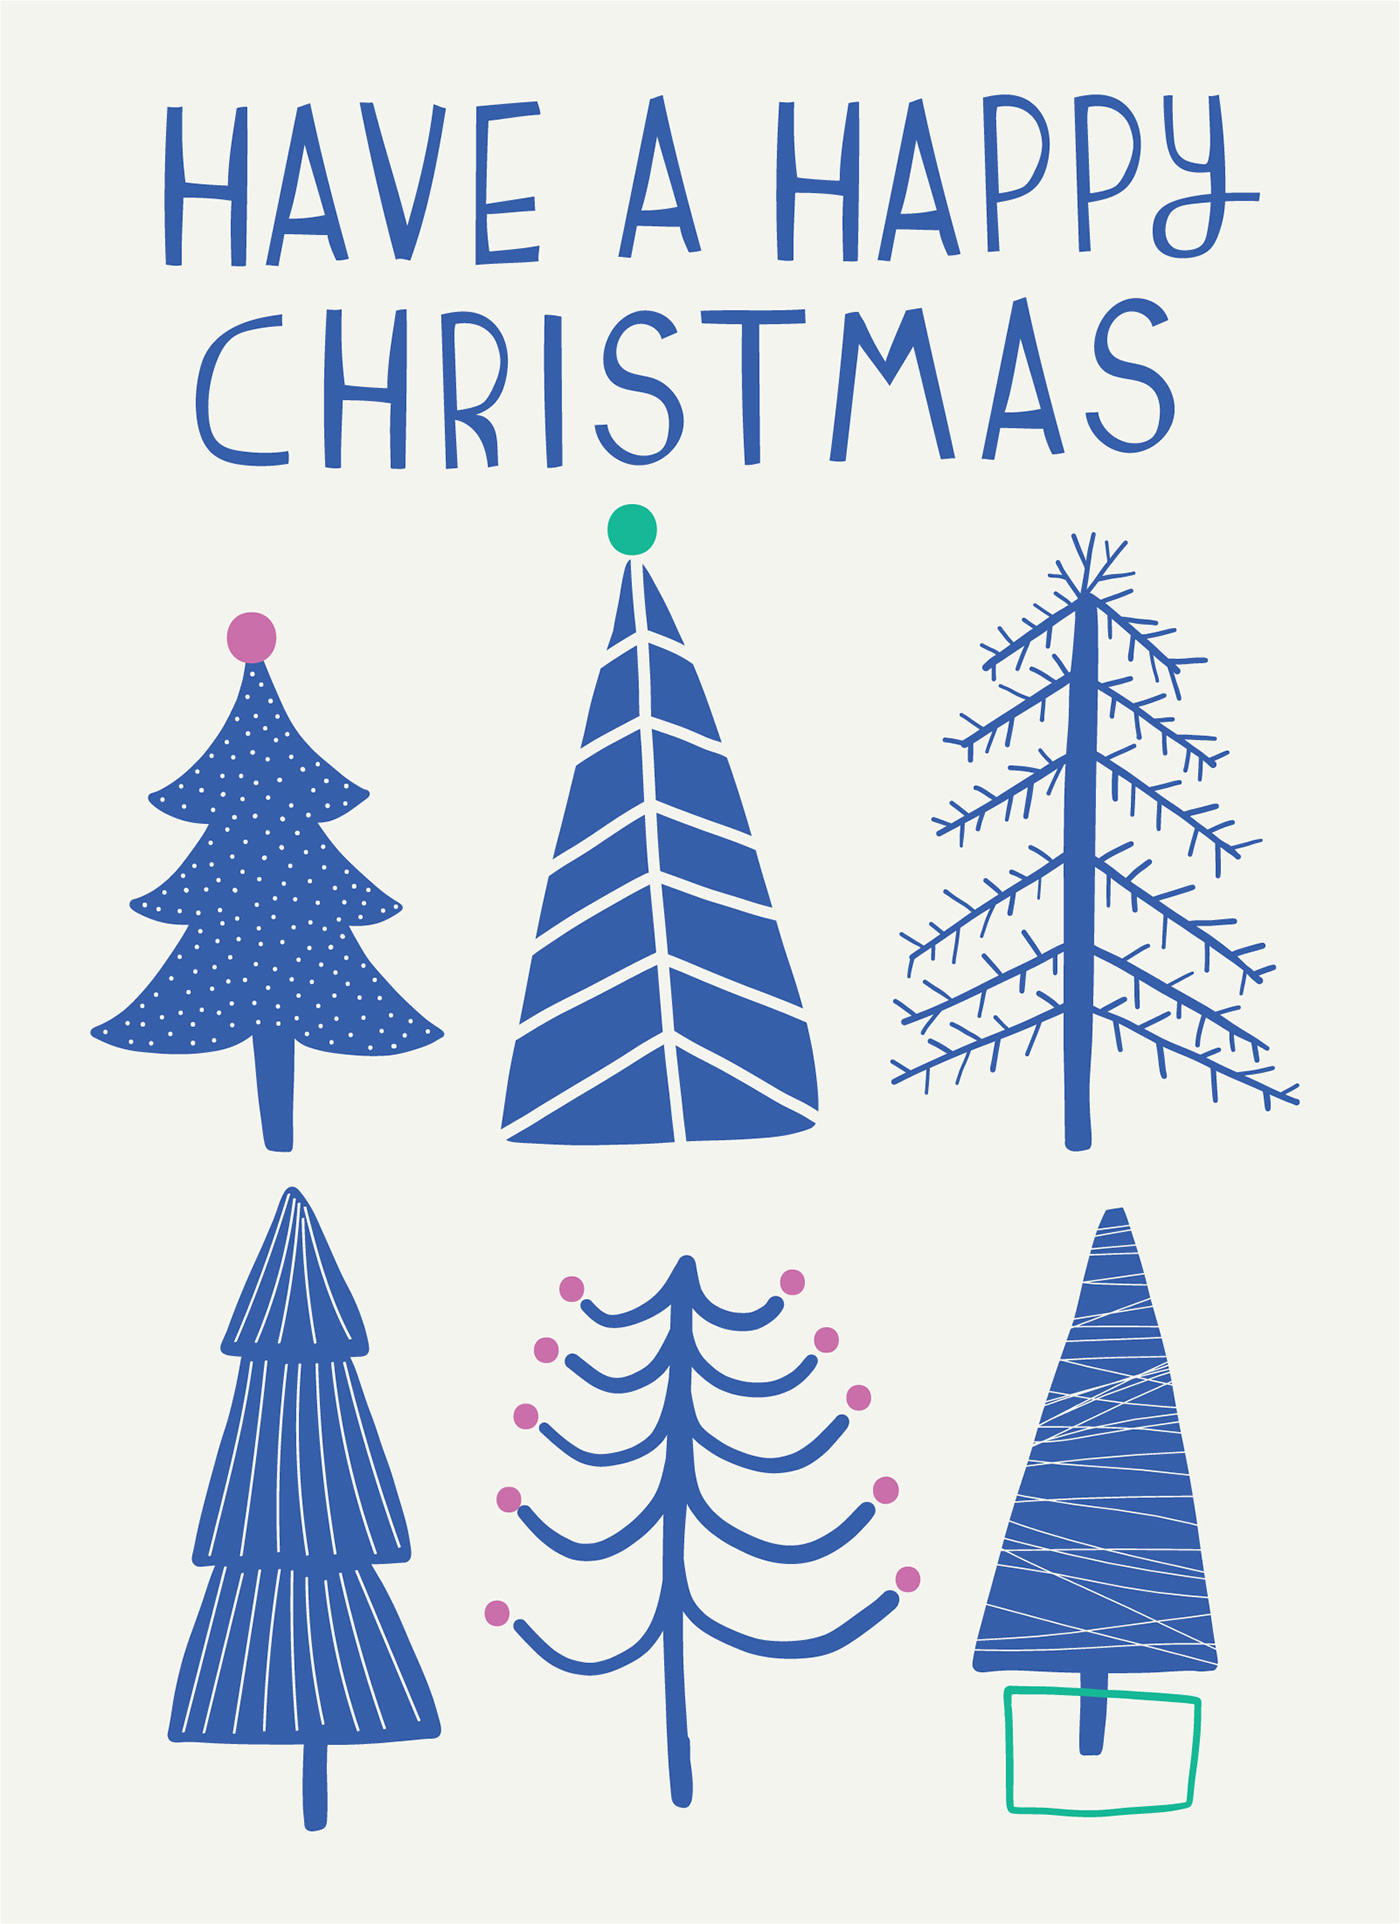 Christmas Christmas trees Christmas Gift Wrap greeting cards christmas cards print and pattern London Illustrator Alice Potter